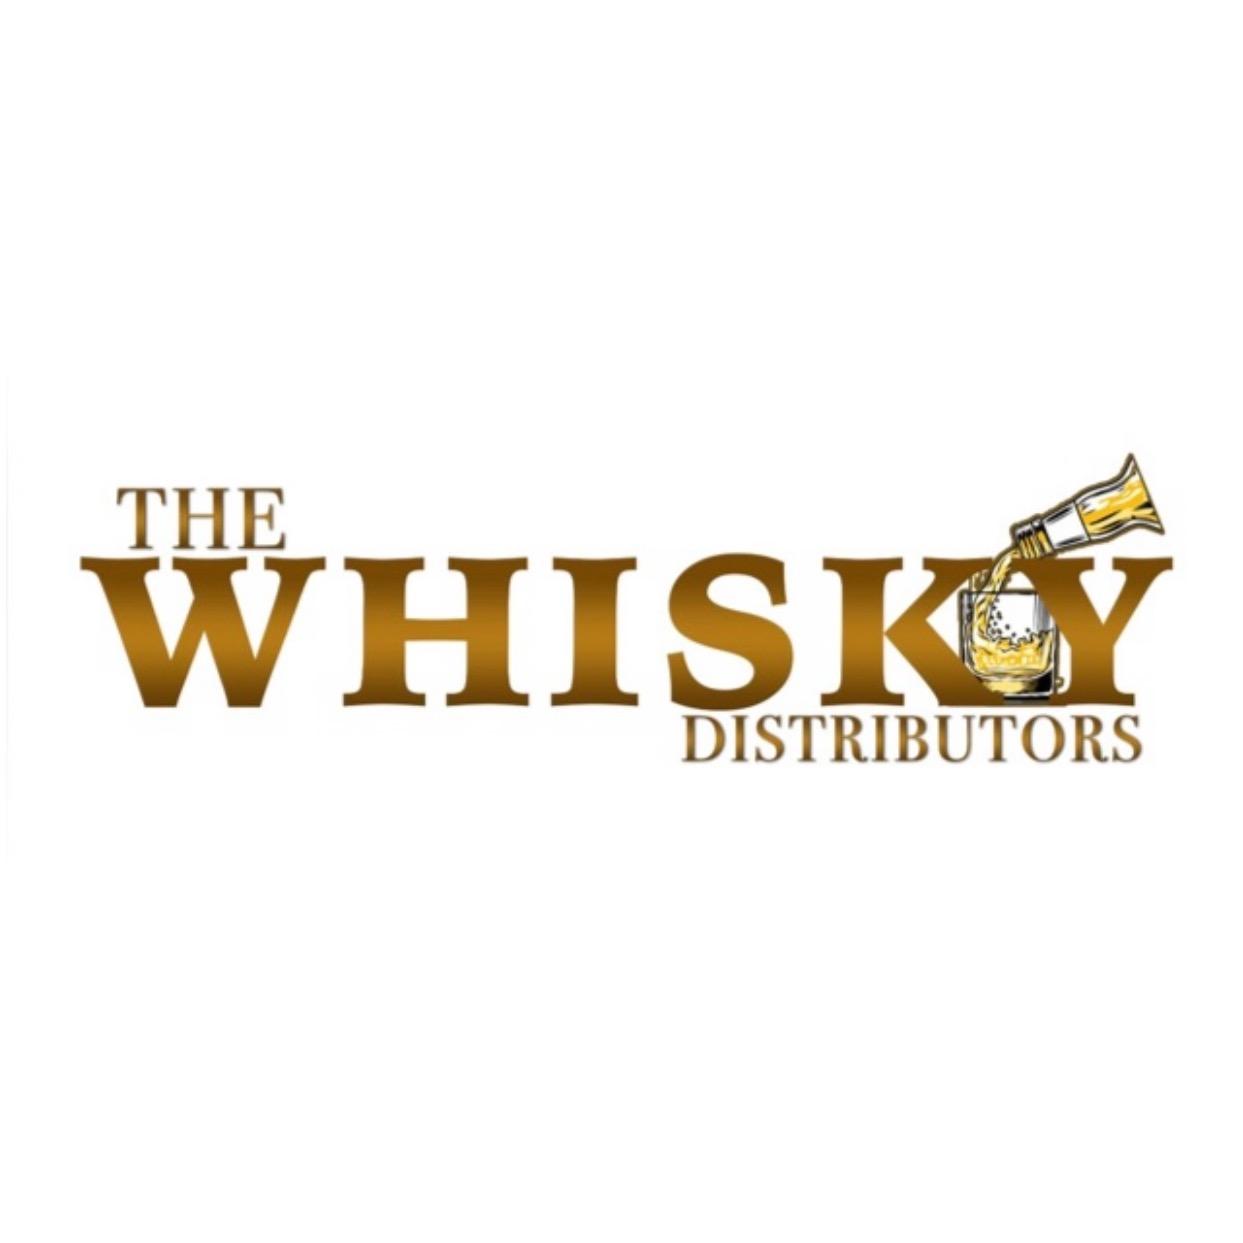 Thé whisky distributors llc Denton (512)920-2547